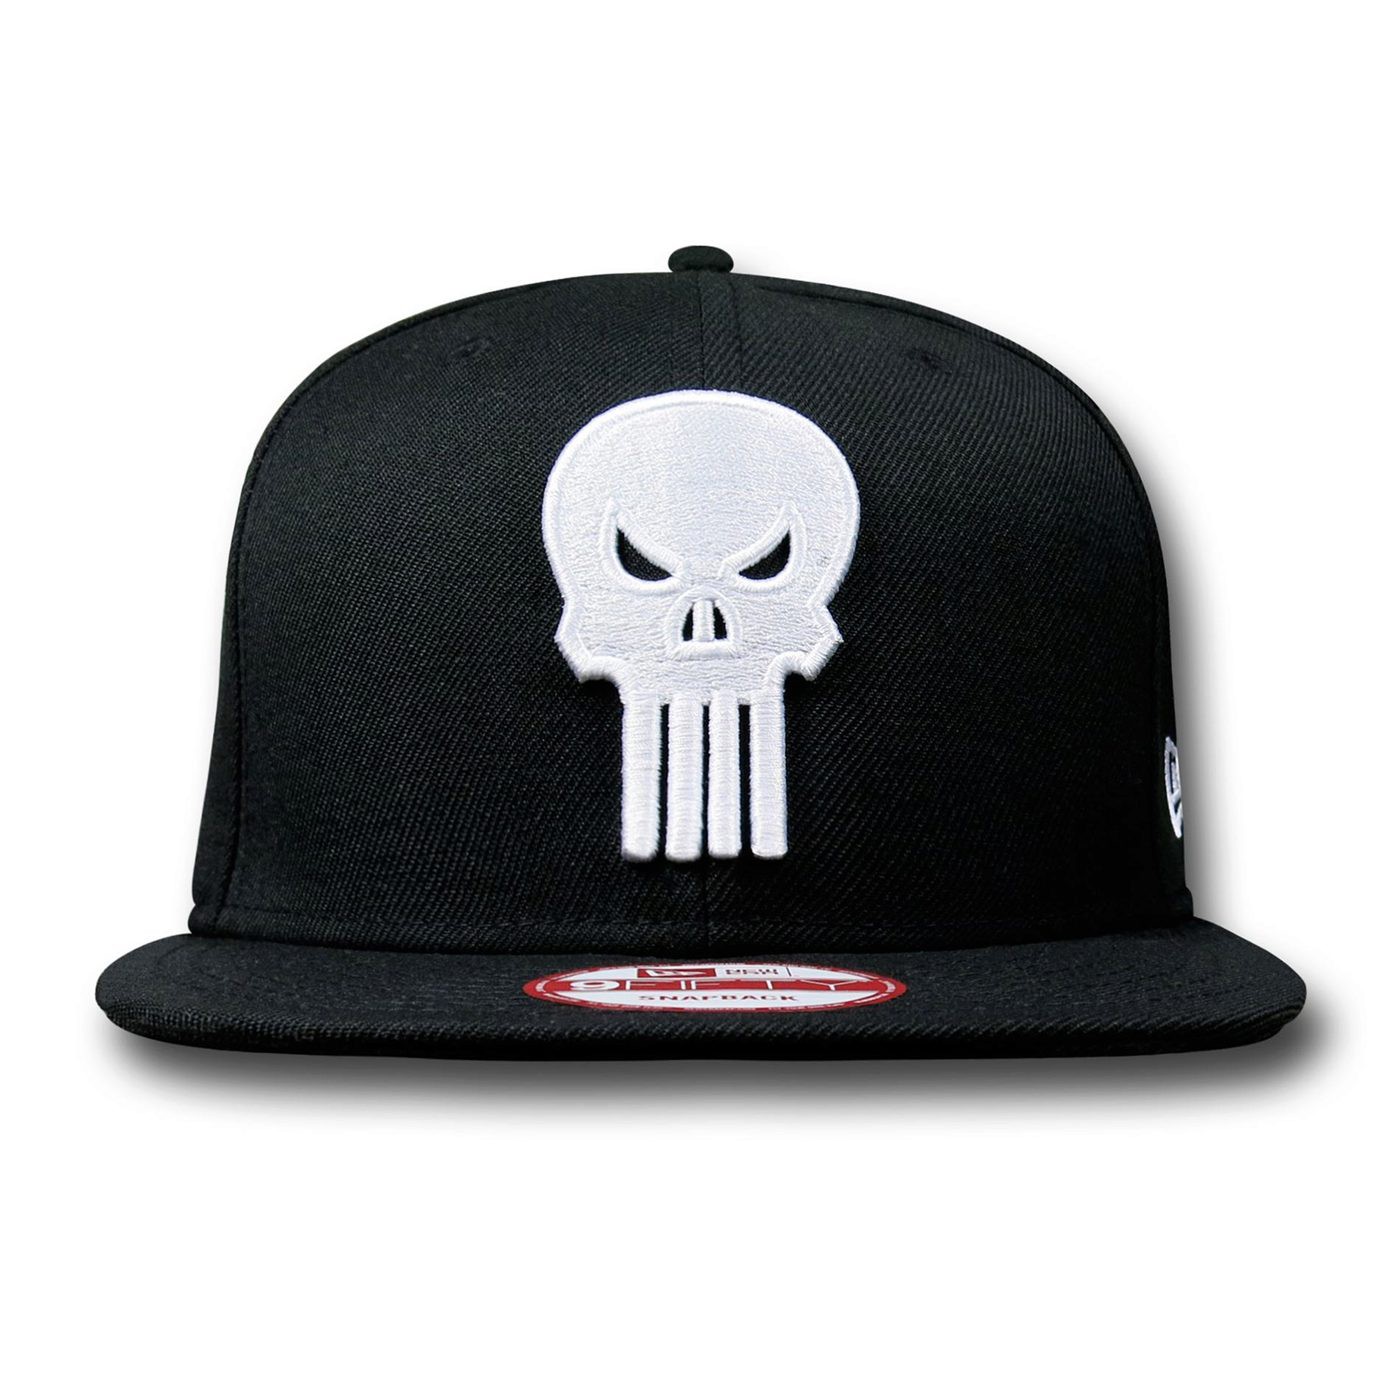 Punisher Symbol Black 9Fifty Cap